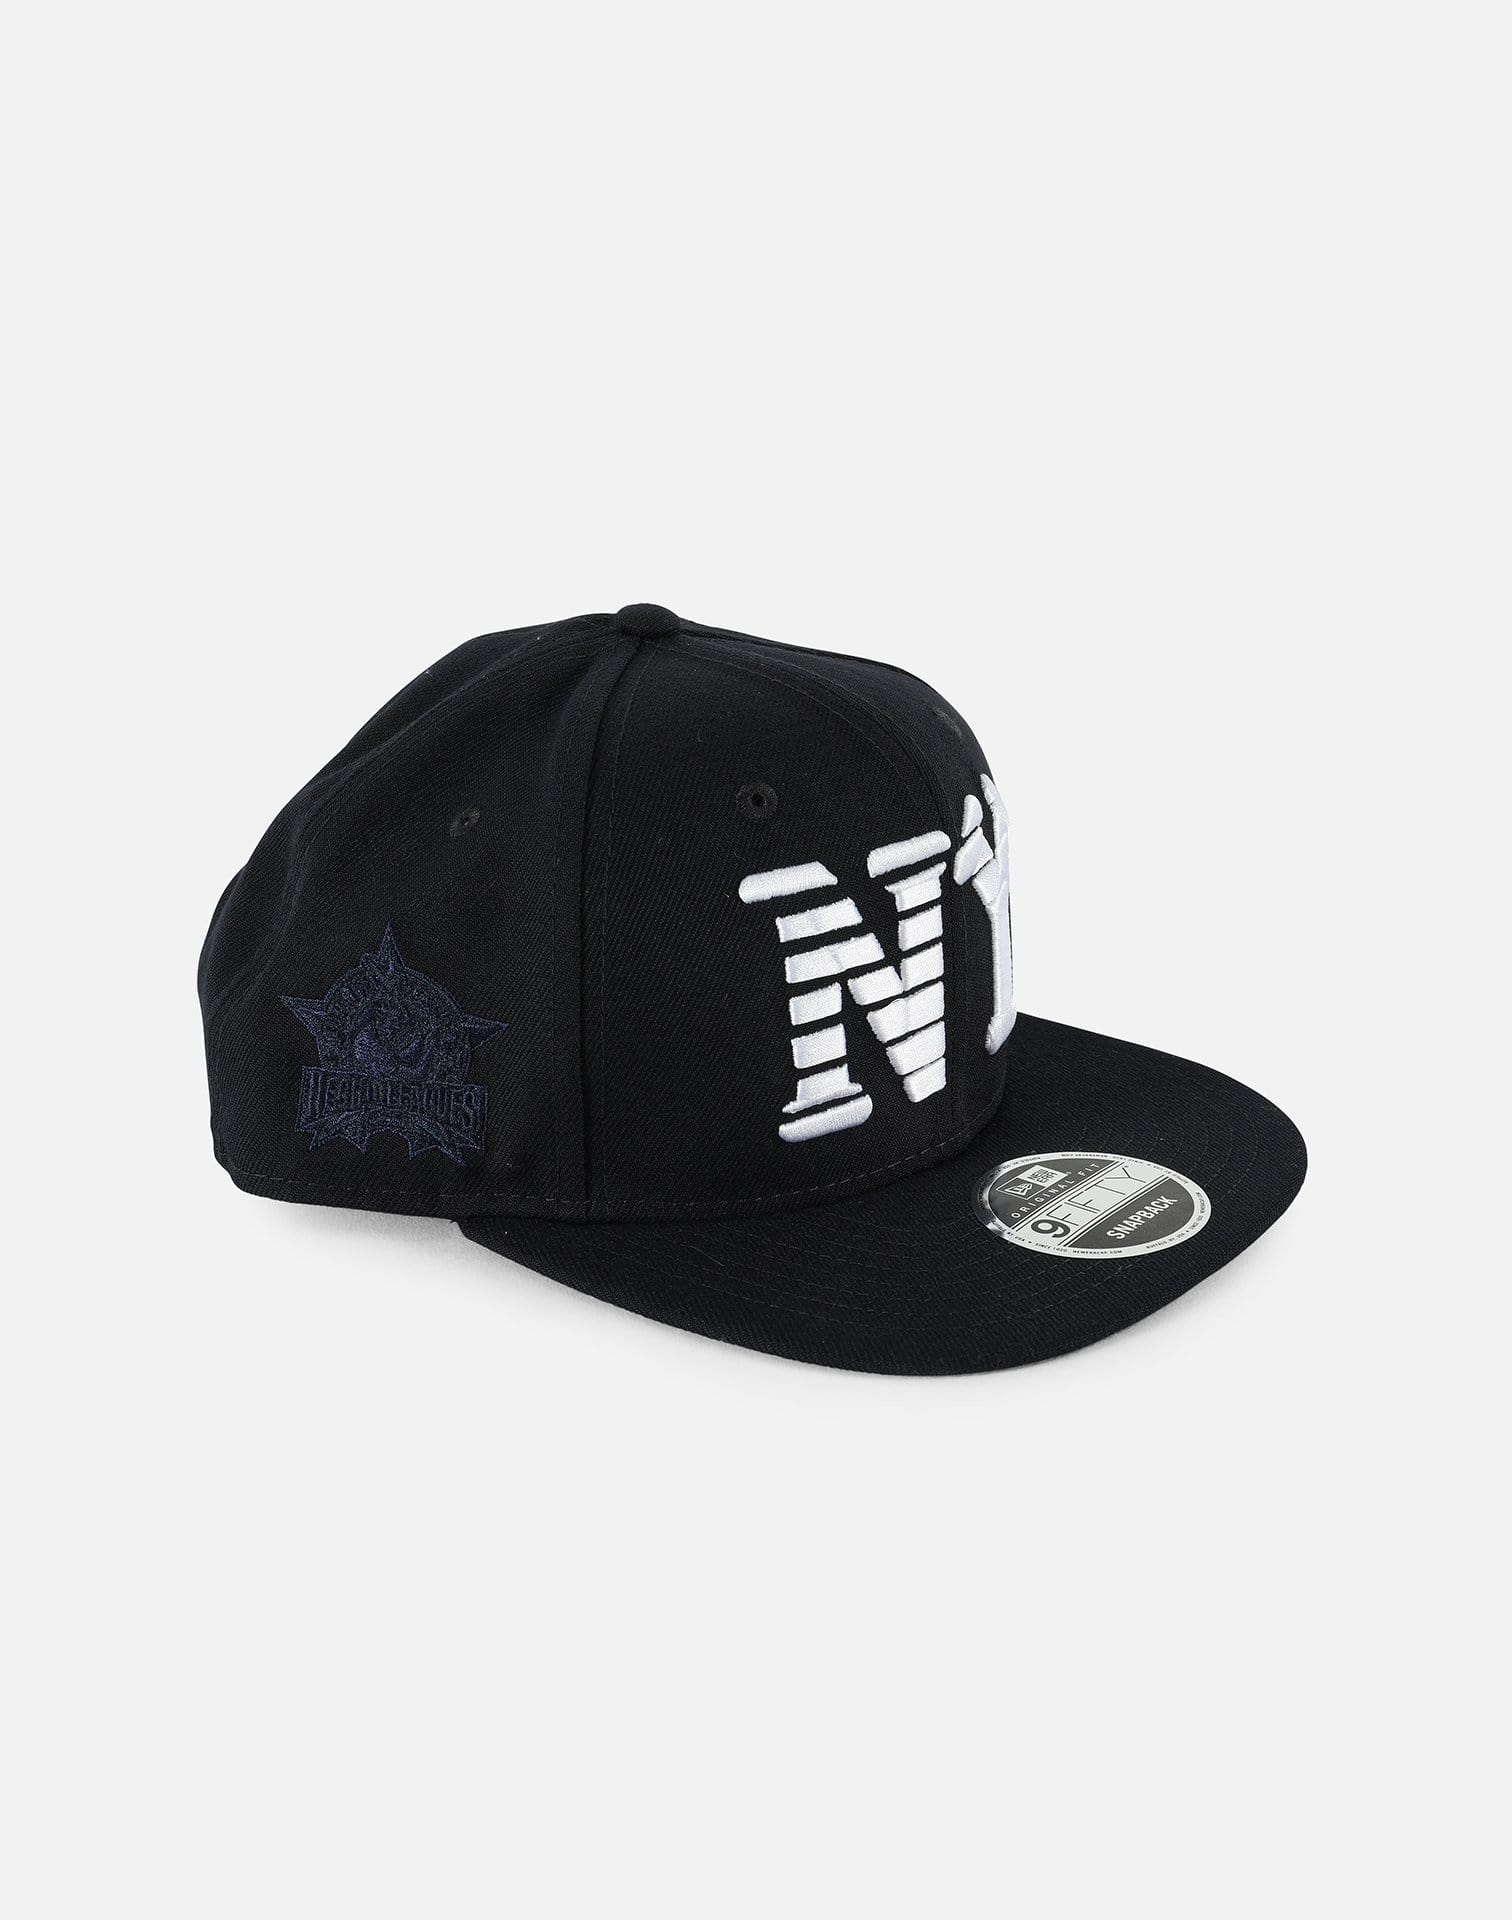 New Era MLB New York Yankees Snapback Hat